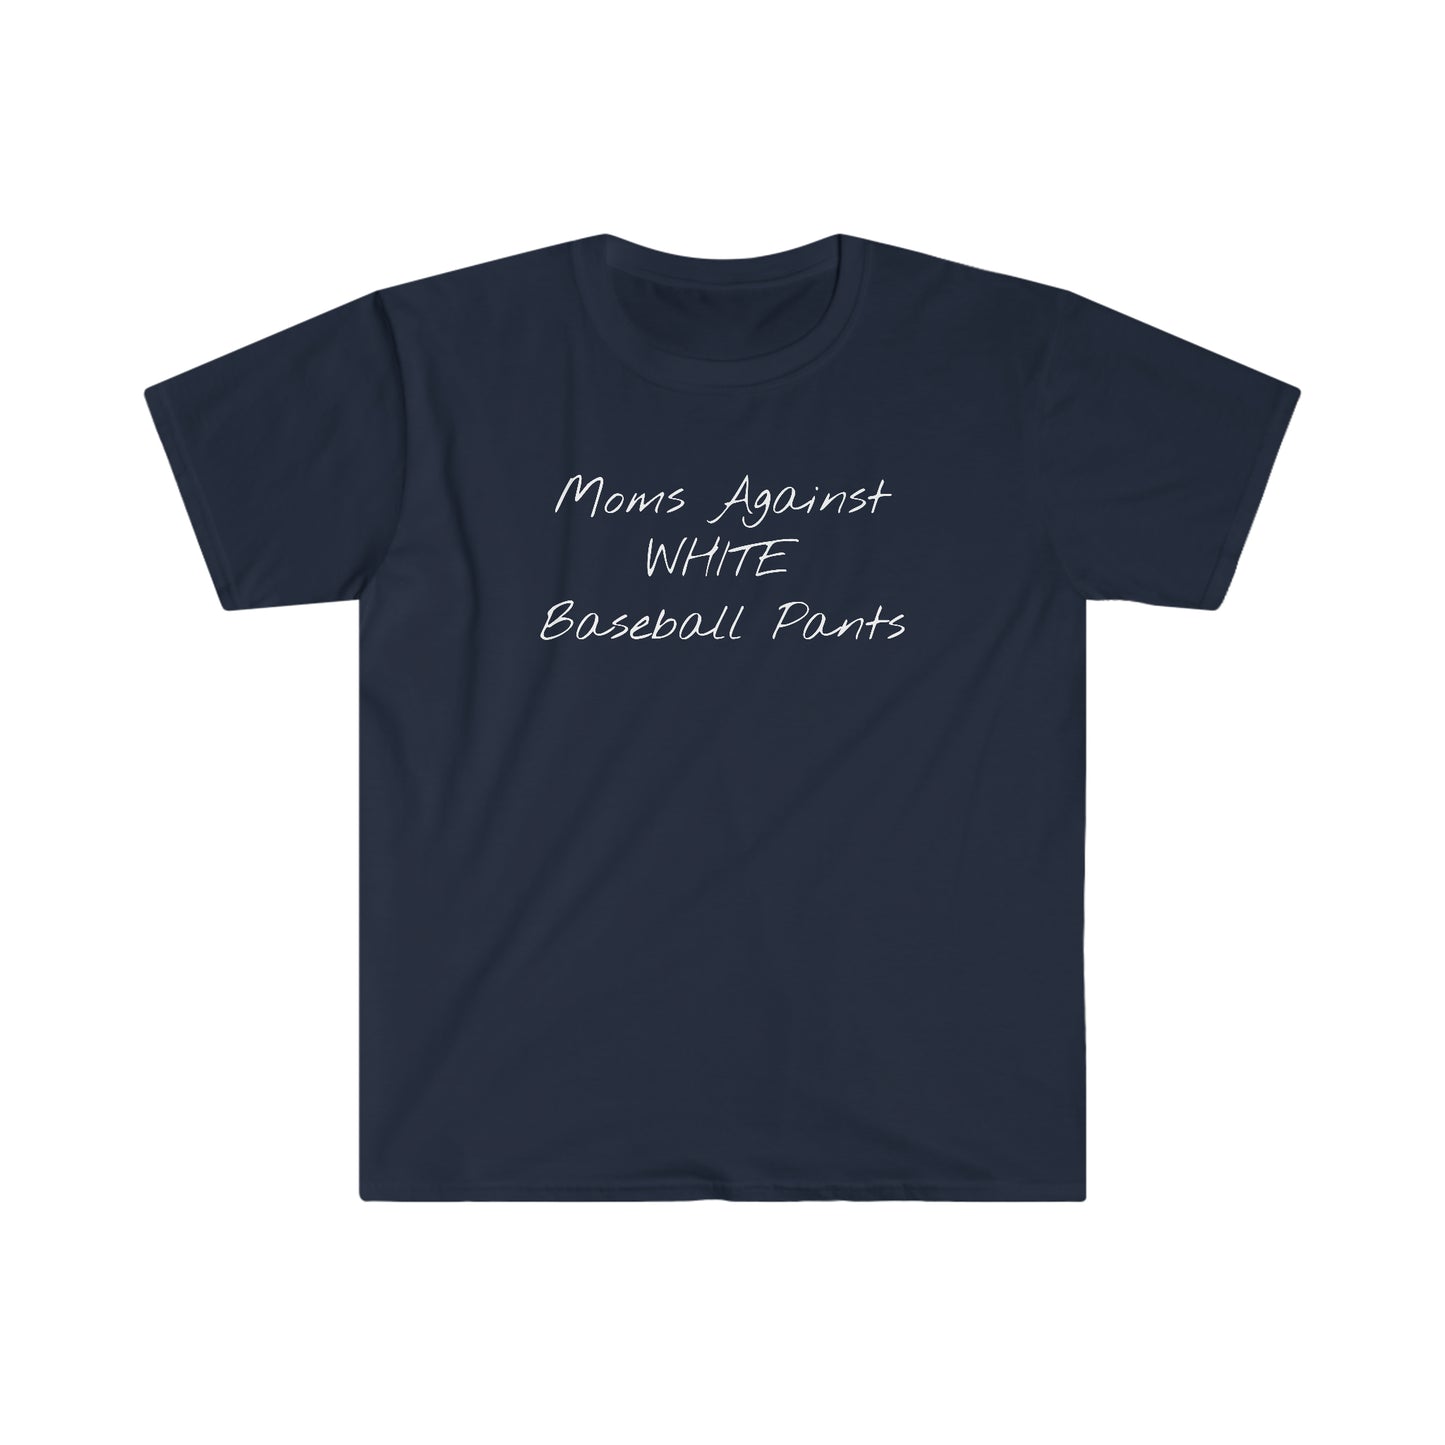 "Moms Against White Baseball Pants" Softstyle T-Shirt